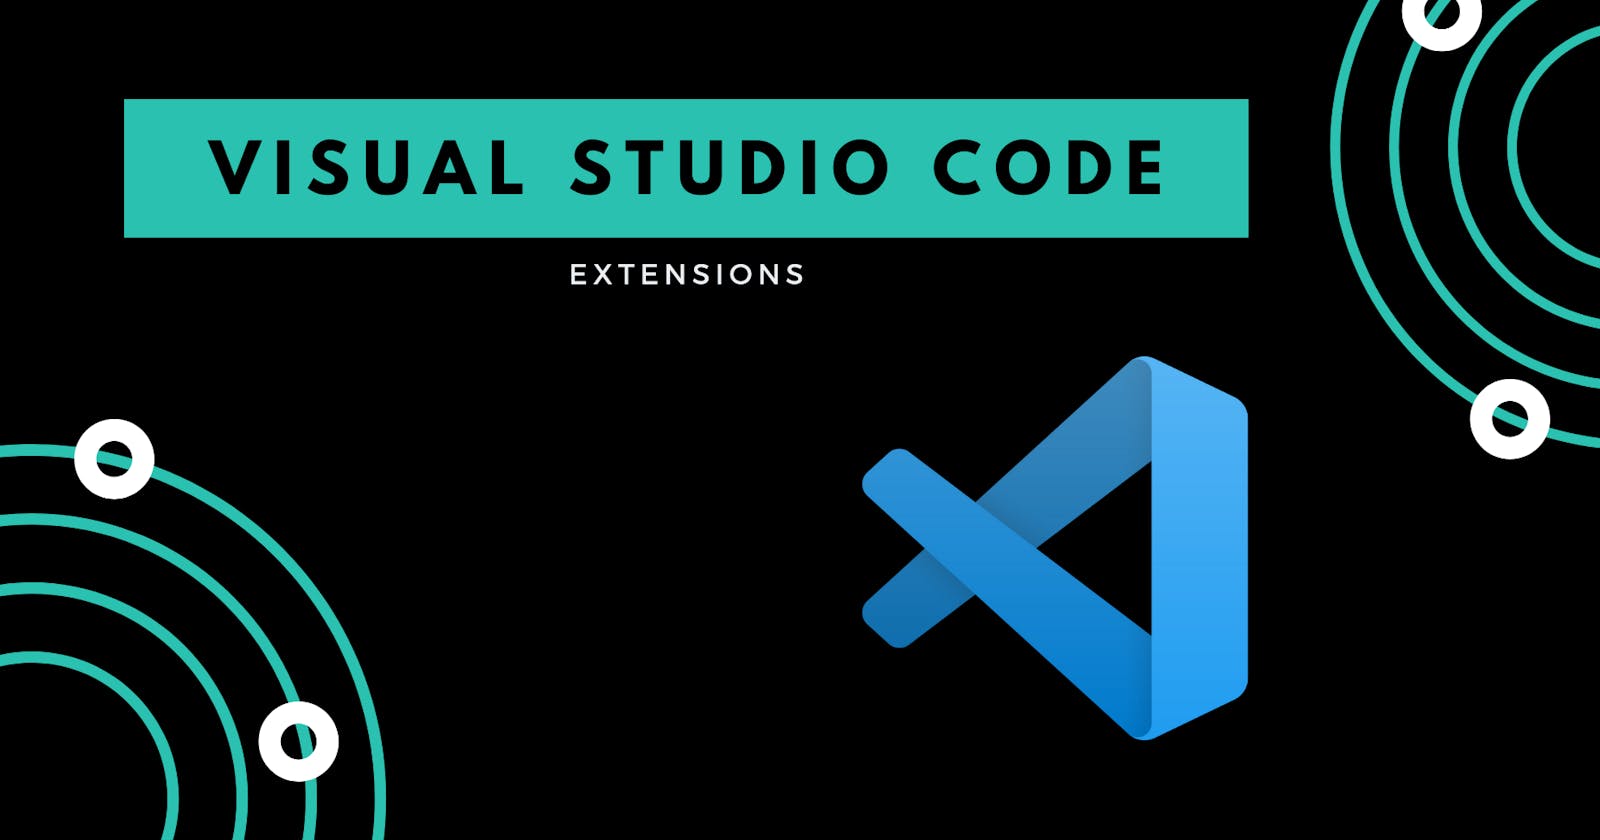 Visual Studio Code Extensions for .Net development